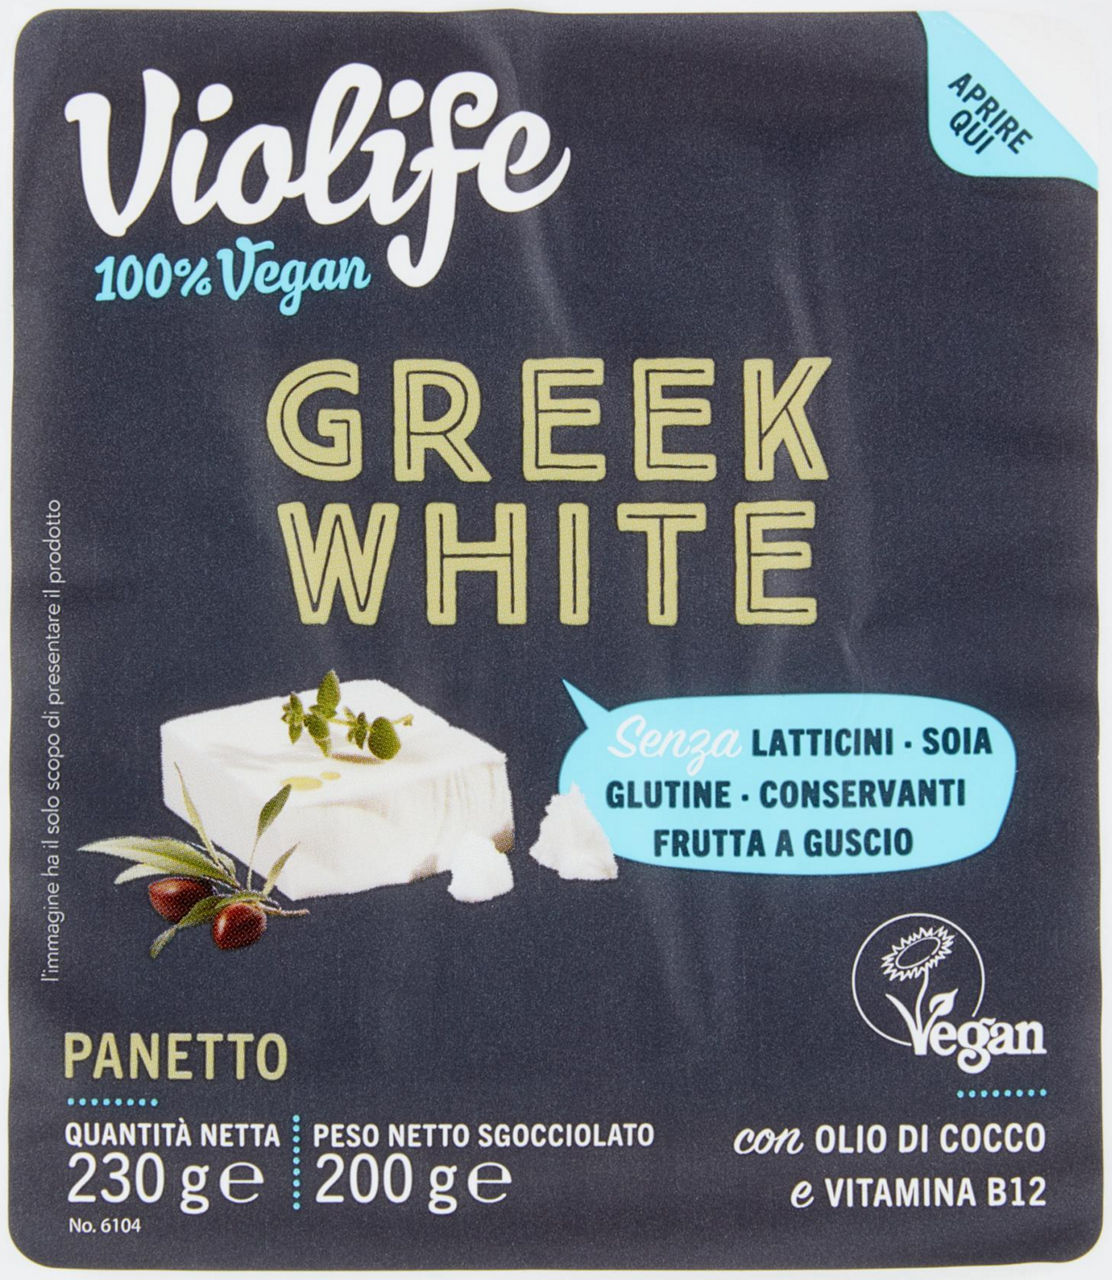 Violife vegan greek white g 230 sgocc g 200